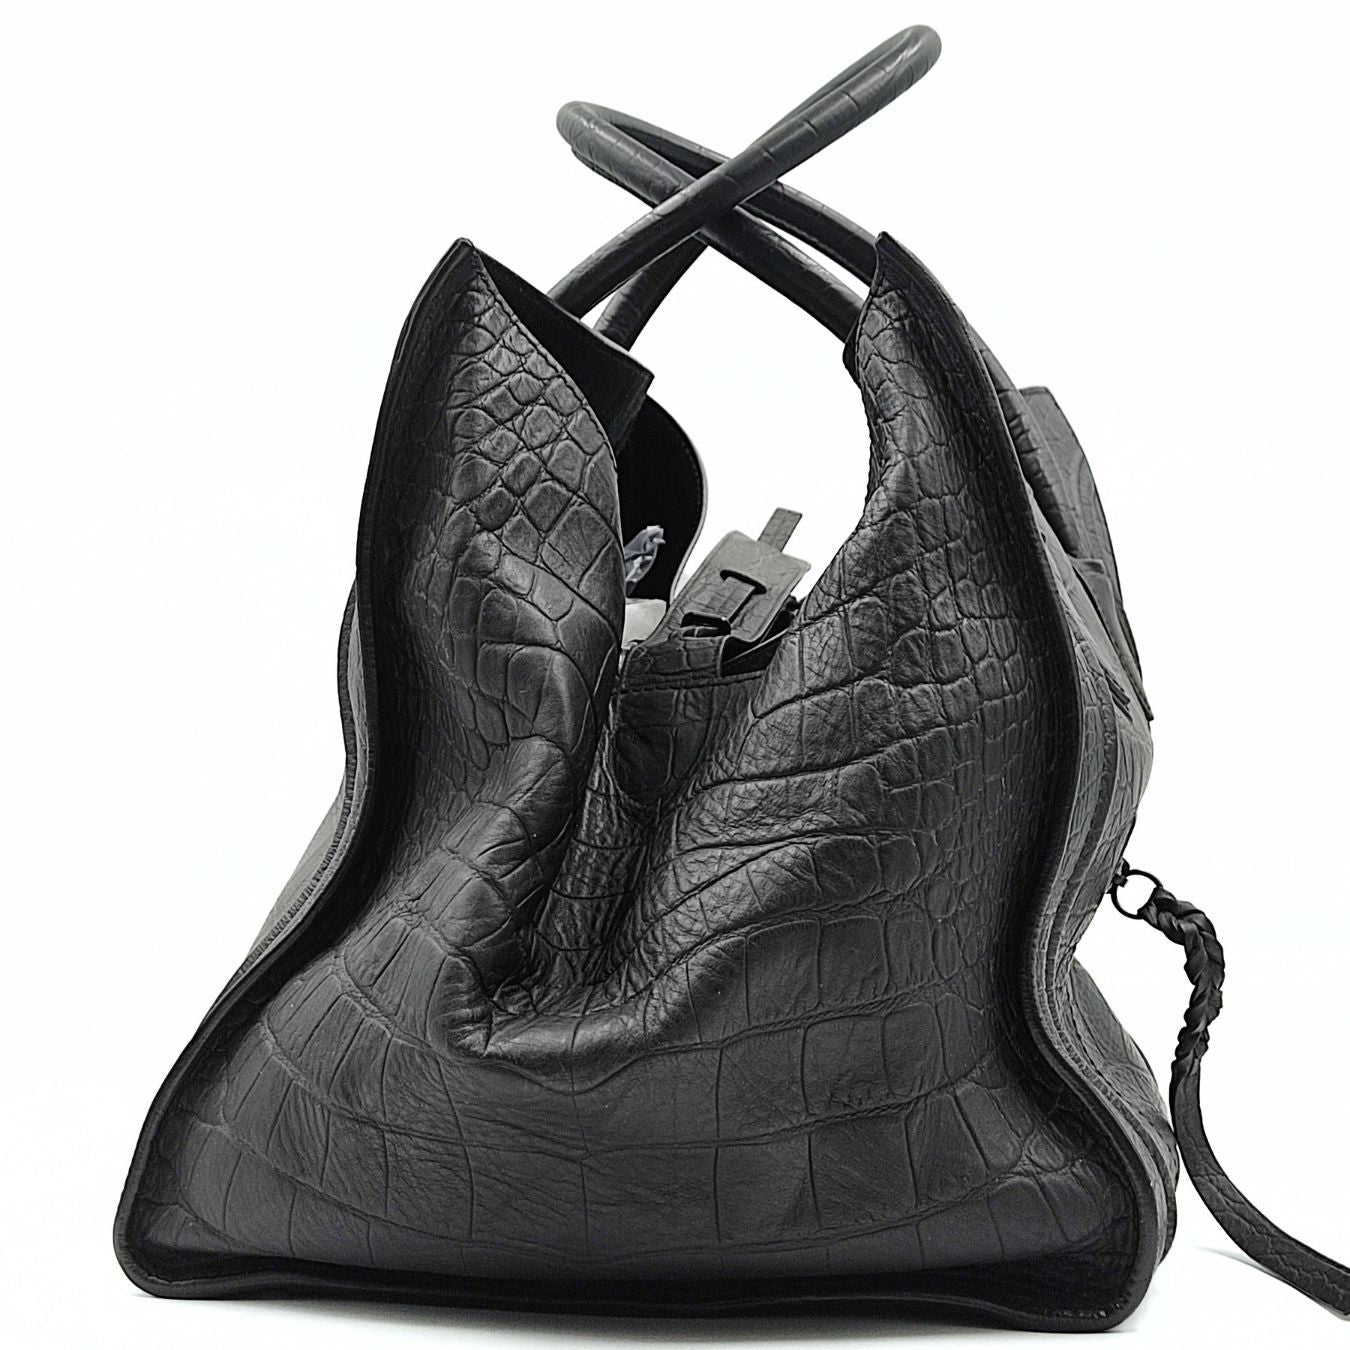 CELINE Celine Celine Luggage Phantom large bag in coco print leather